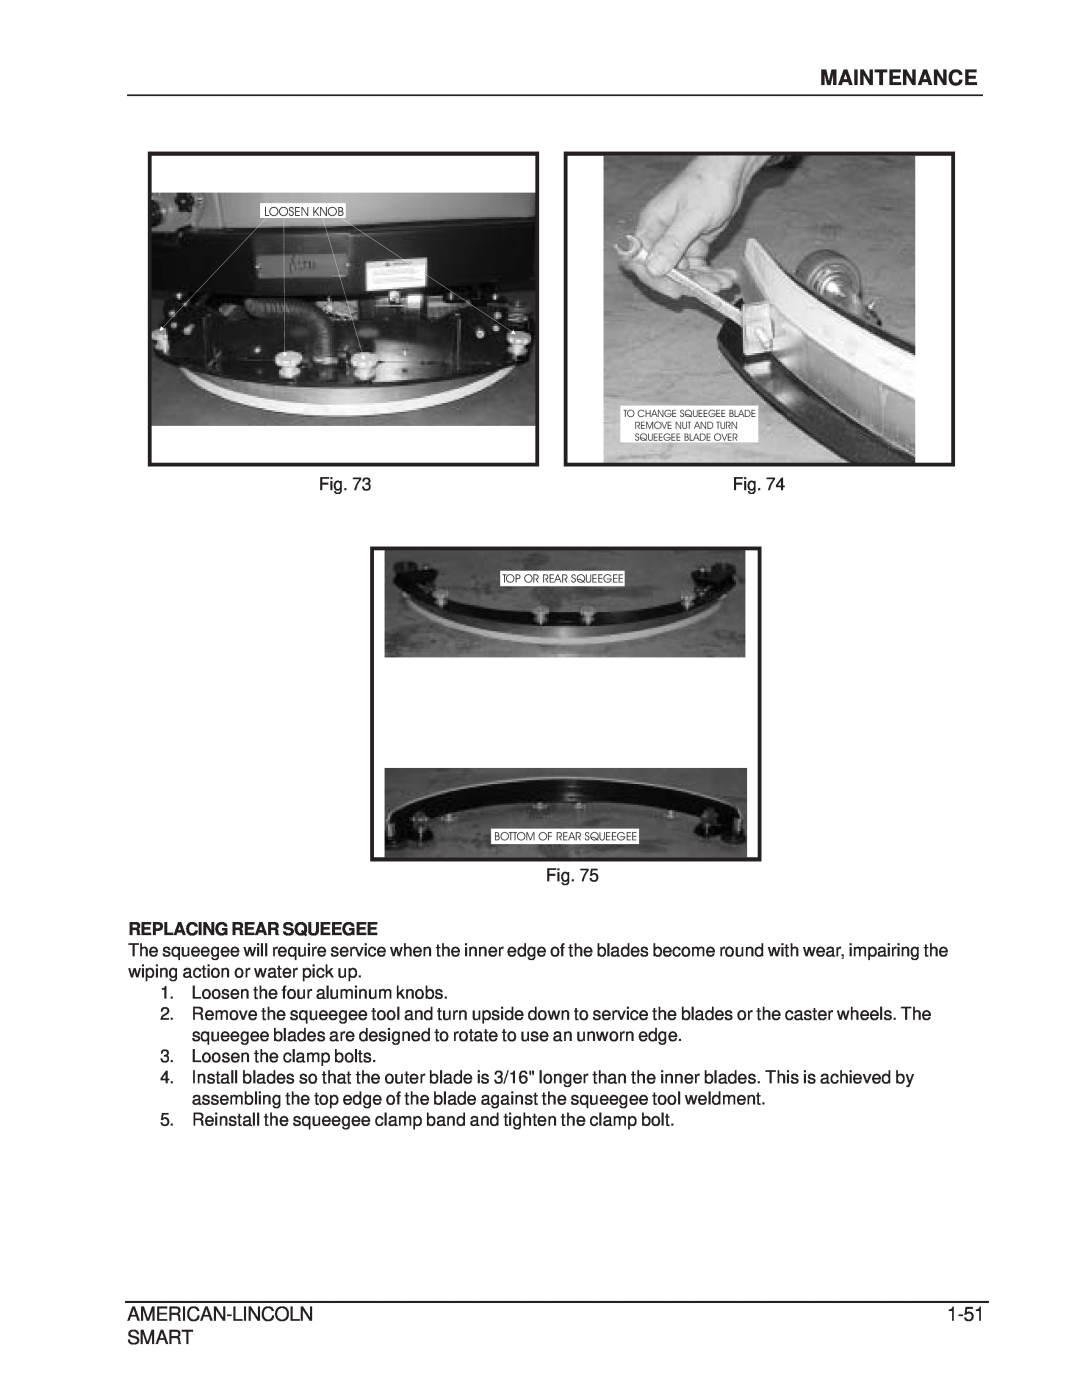 Nilfisk-ALTO 692003 manual Maintenance, American-Lincoln, 1-51, Smart, Replacing Rear Squeegee 